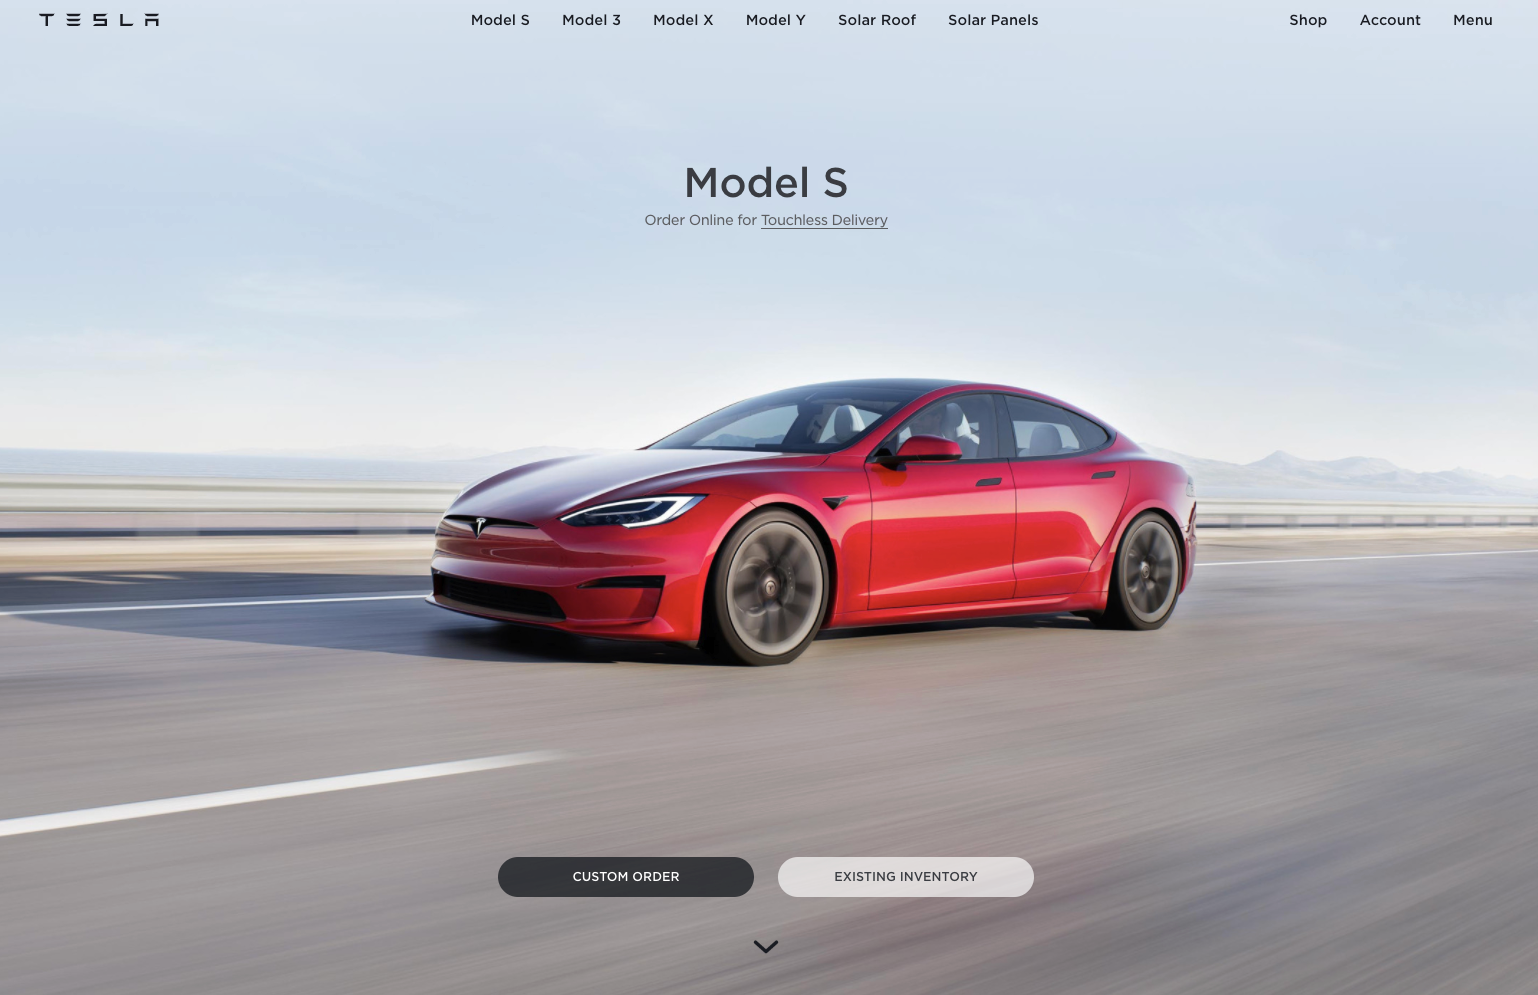 Tesla embraces web design principles like clear, simple navigation on their site